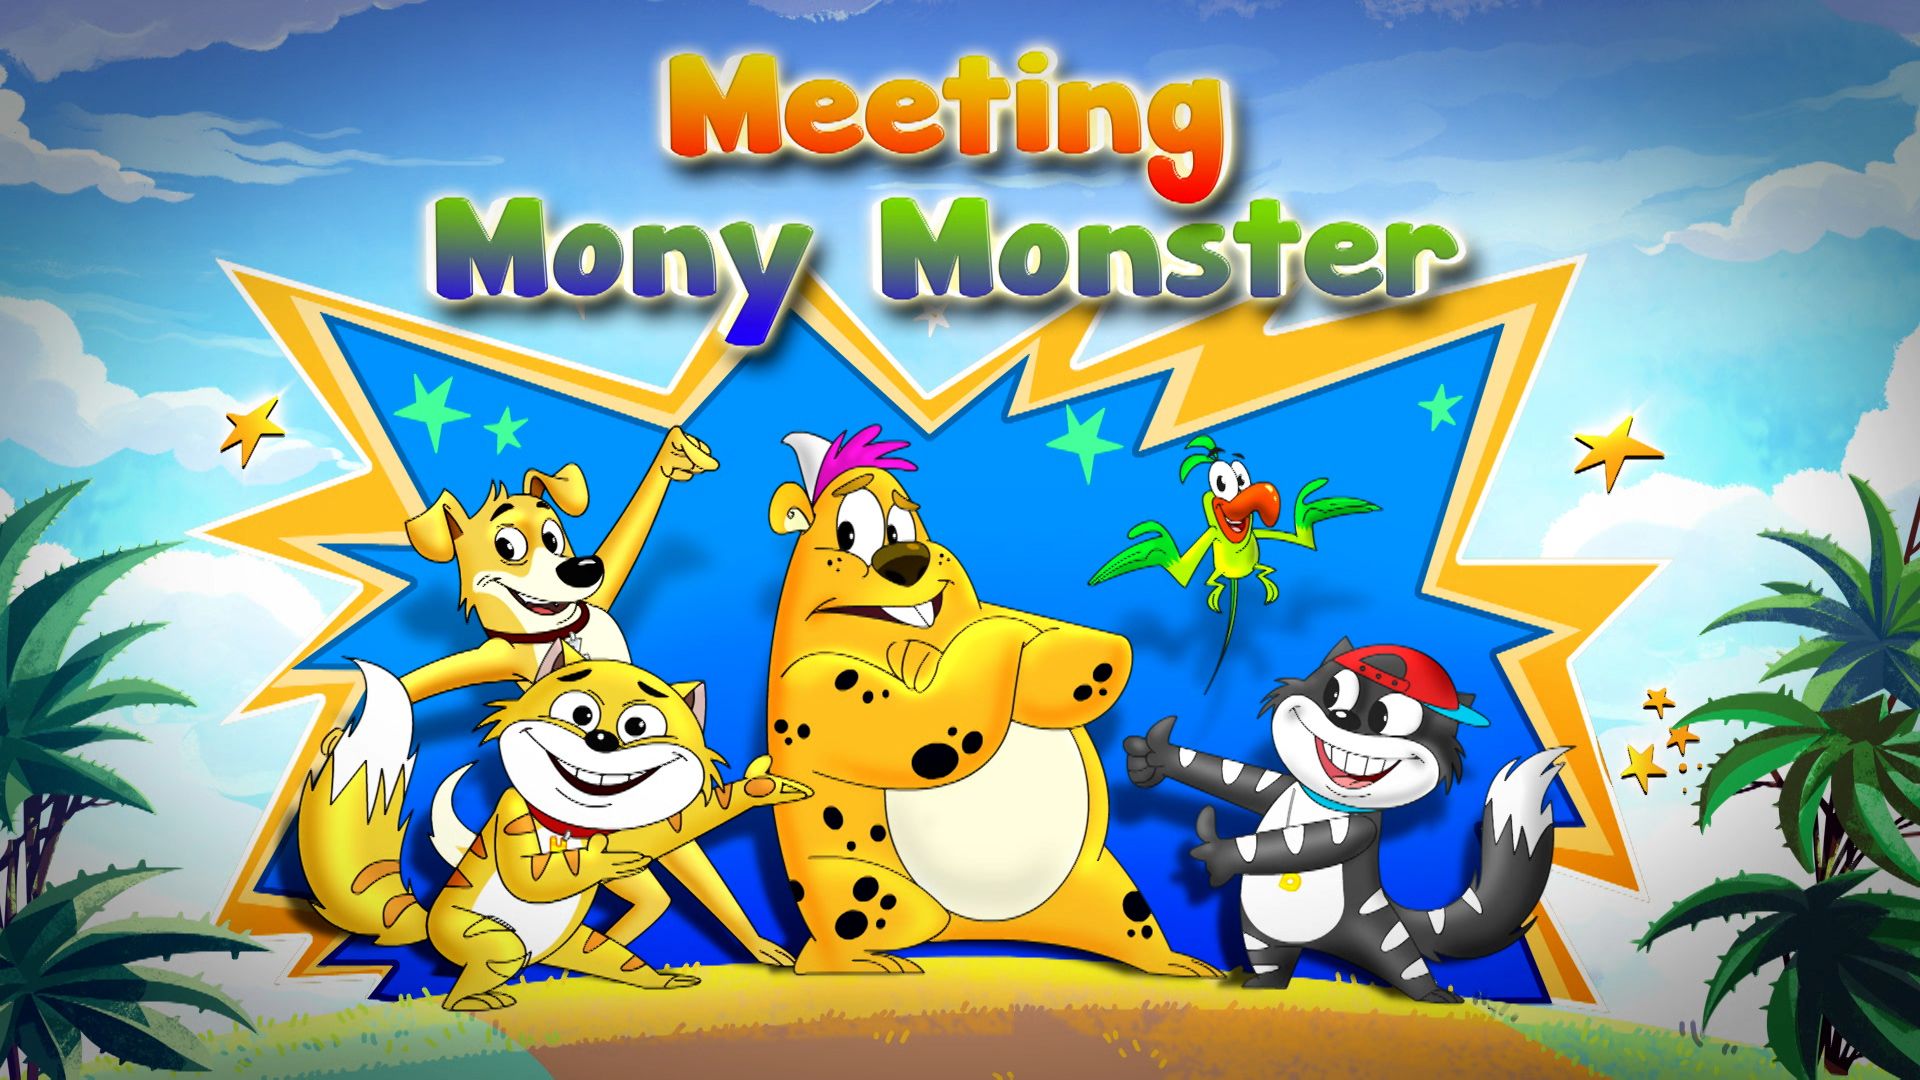 Meeting Mony Monster